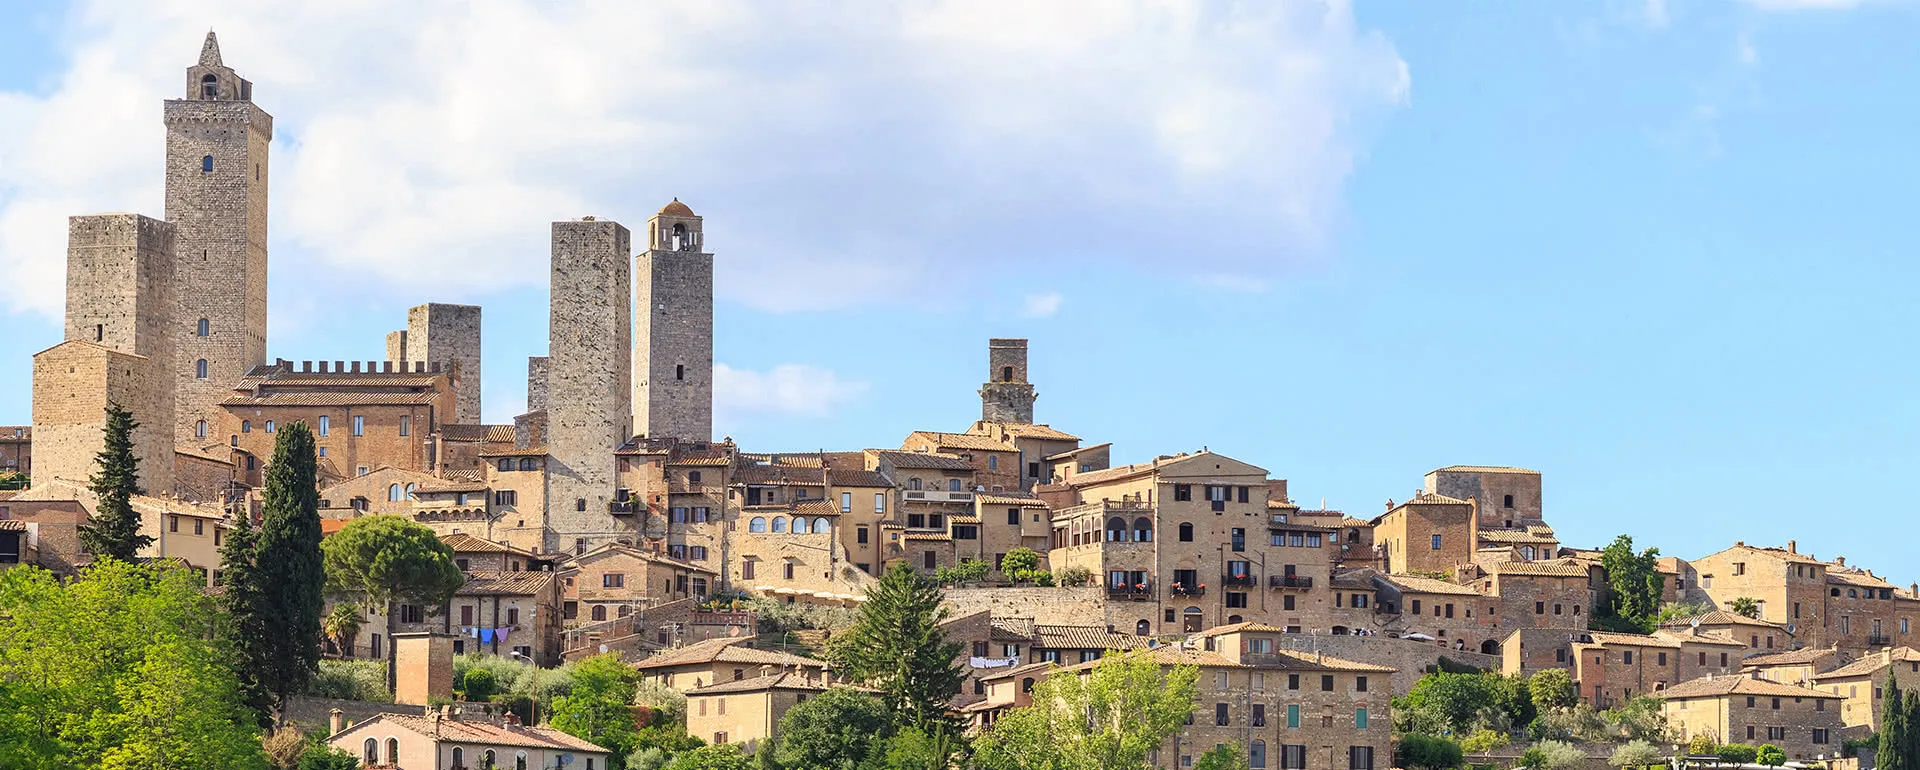 San Gimignano - the destination for school trips